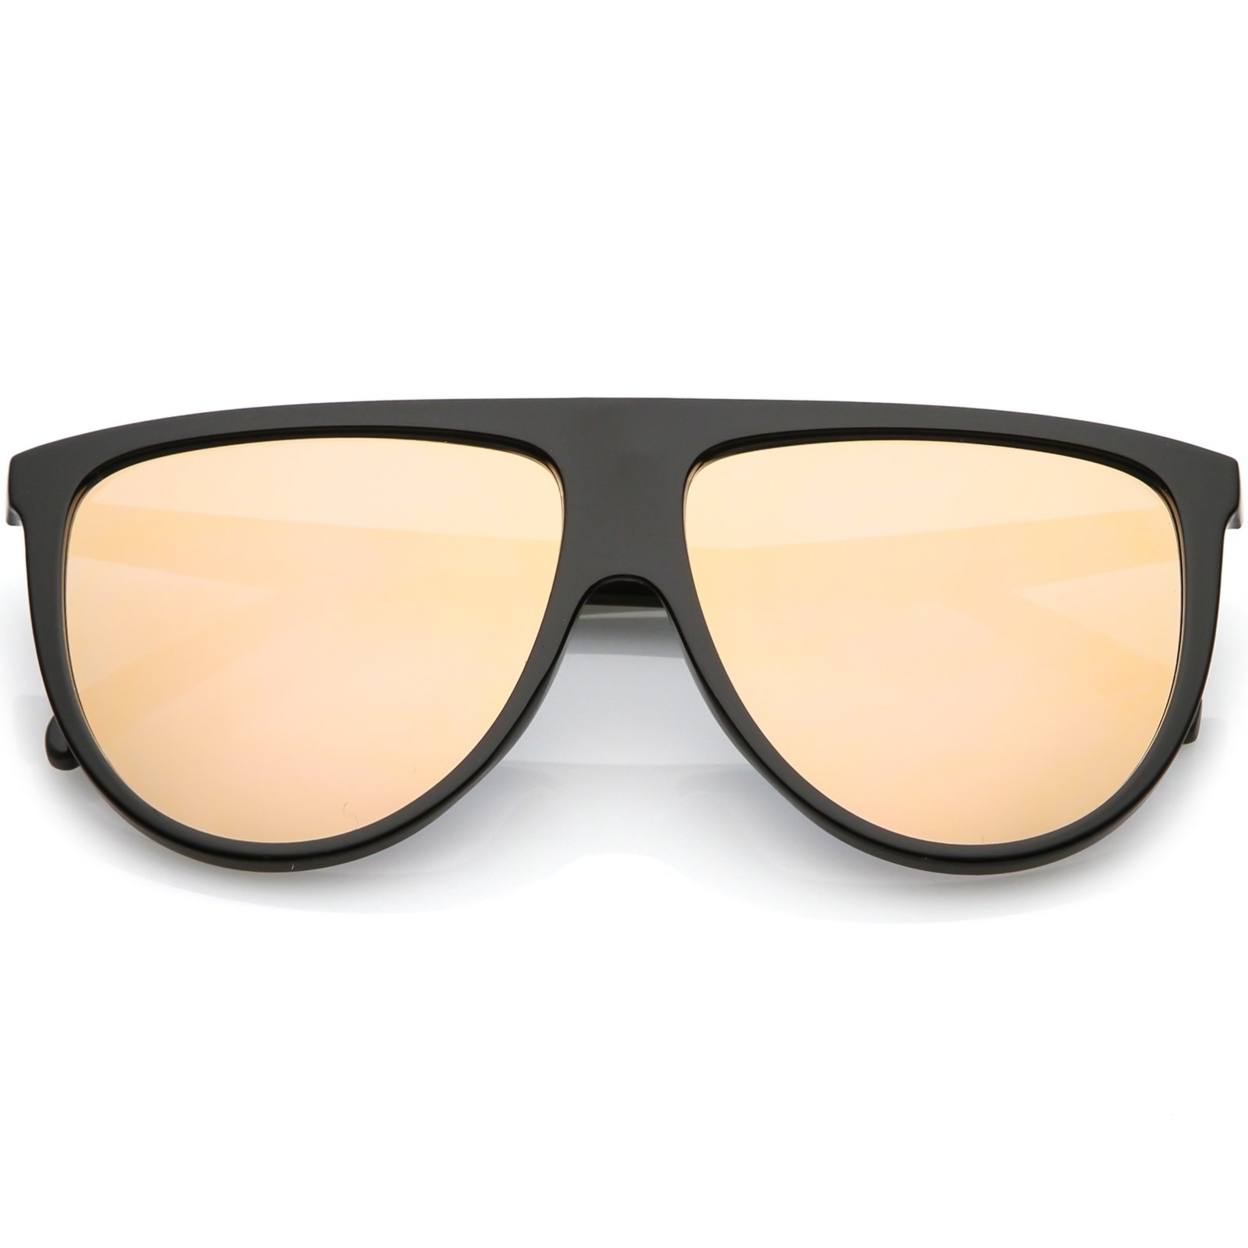 Oversize Modern Aviator Sunglasses Flat Top Color Mirrored Lens 59mm - Black / Blue Mirror